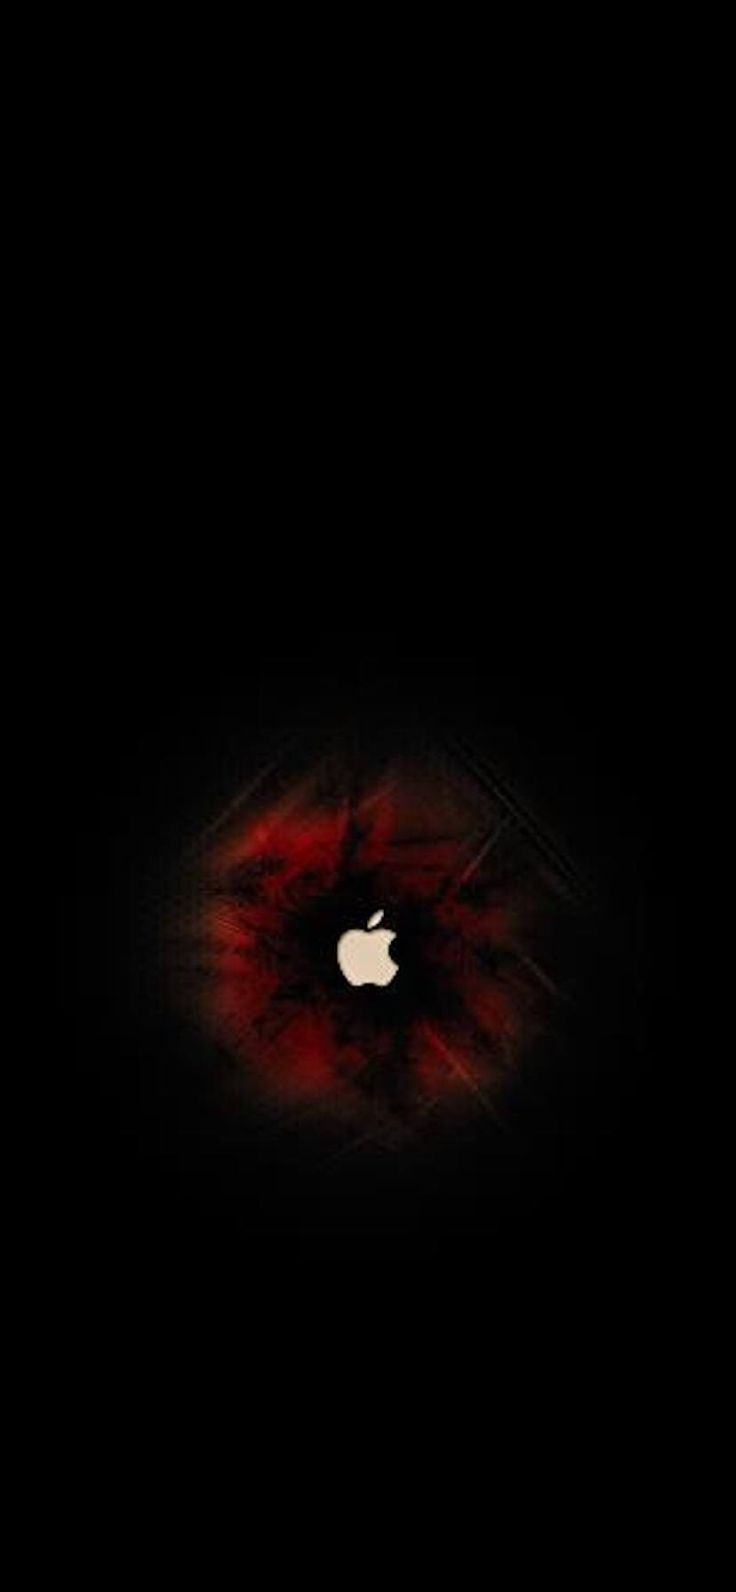 Dark Wallpaper HD for iPhone XS Max, iPhone XS, iPhone XR. Dark wallpaper, HD dark wallpaper, Apple logo wallpaper